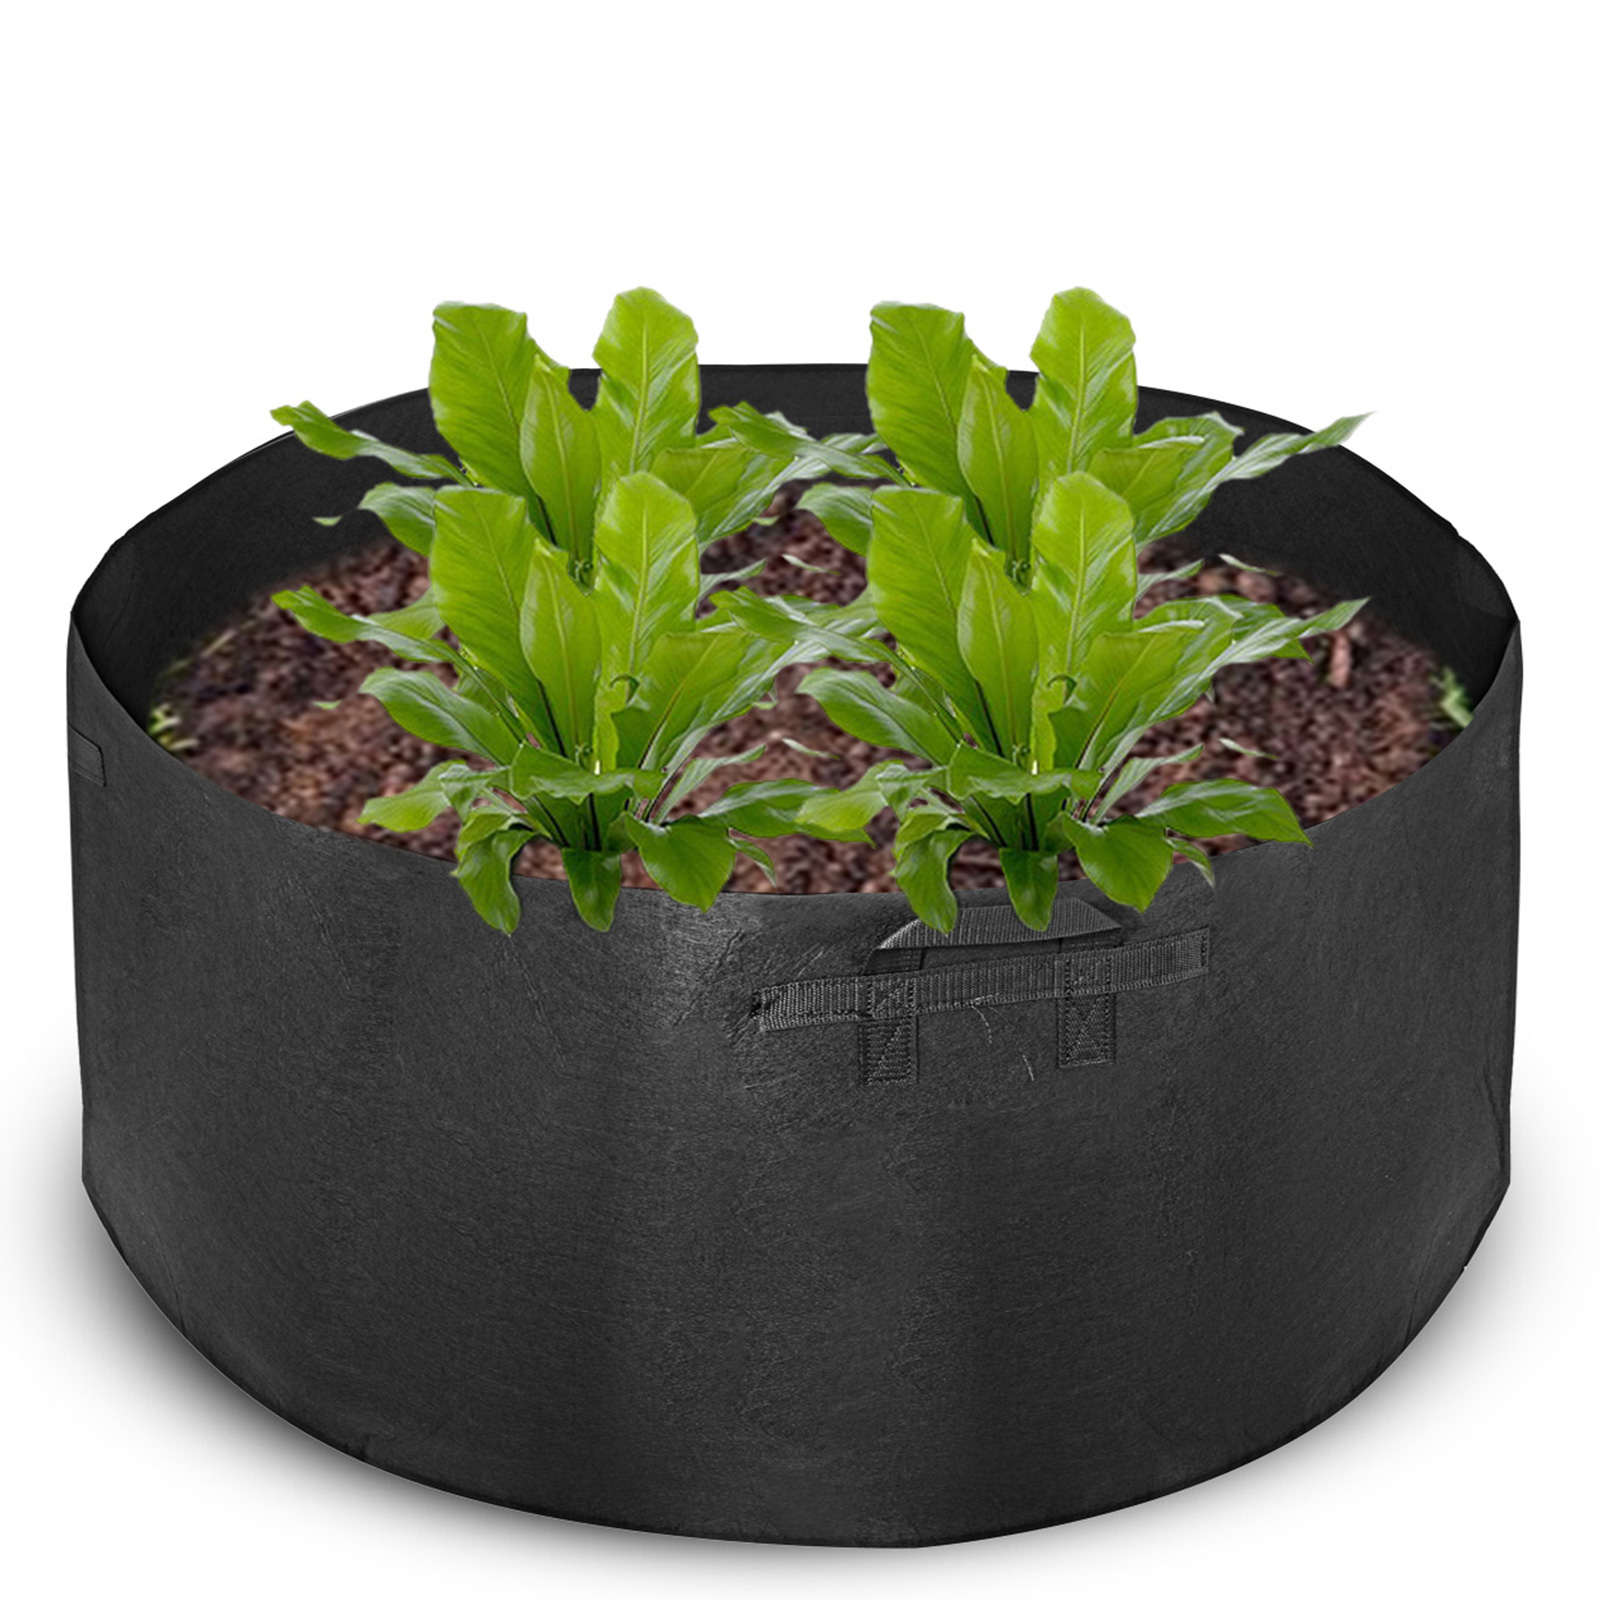 Gallon Garden Grow Bag Flower Vegetable Pot Aeration Planting Pot Planter Pouch 